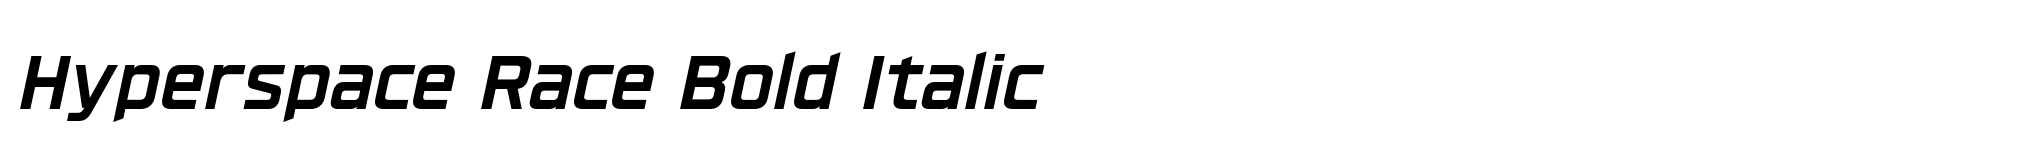 Hyperspace Race Bold Italic image